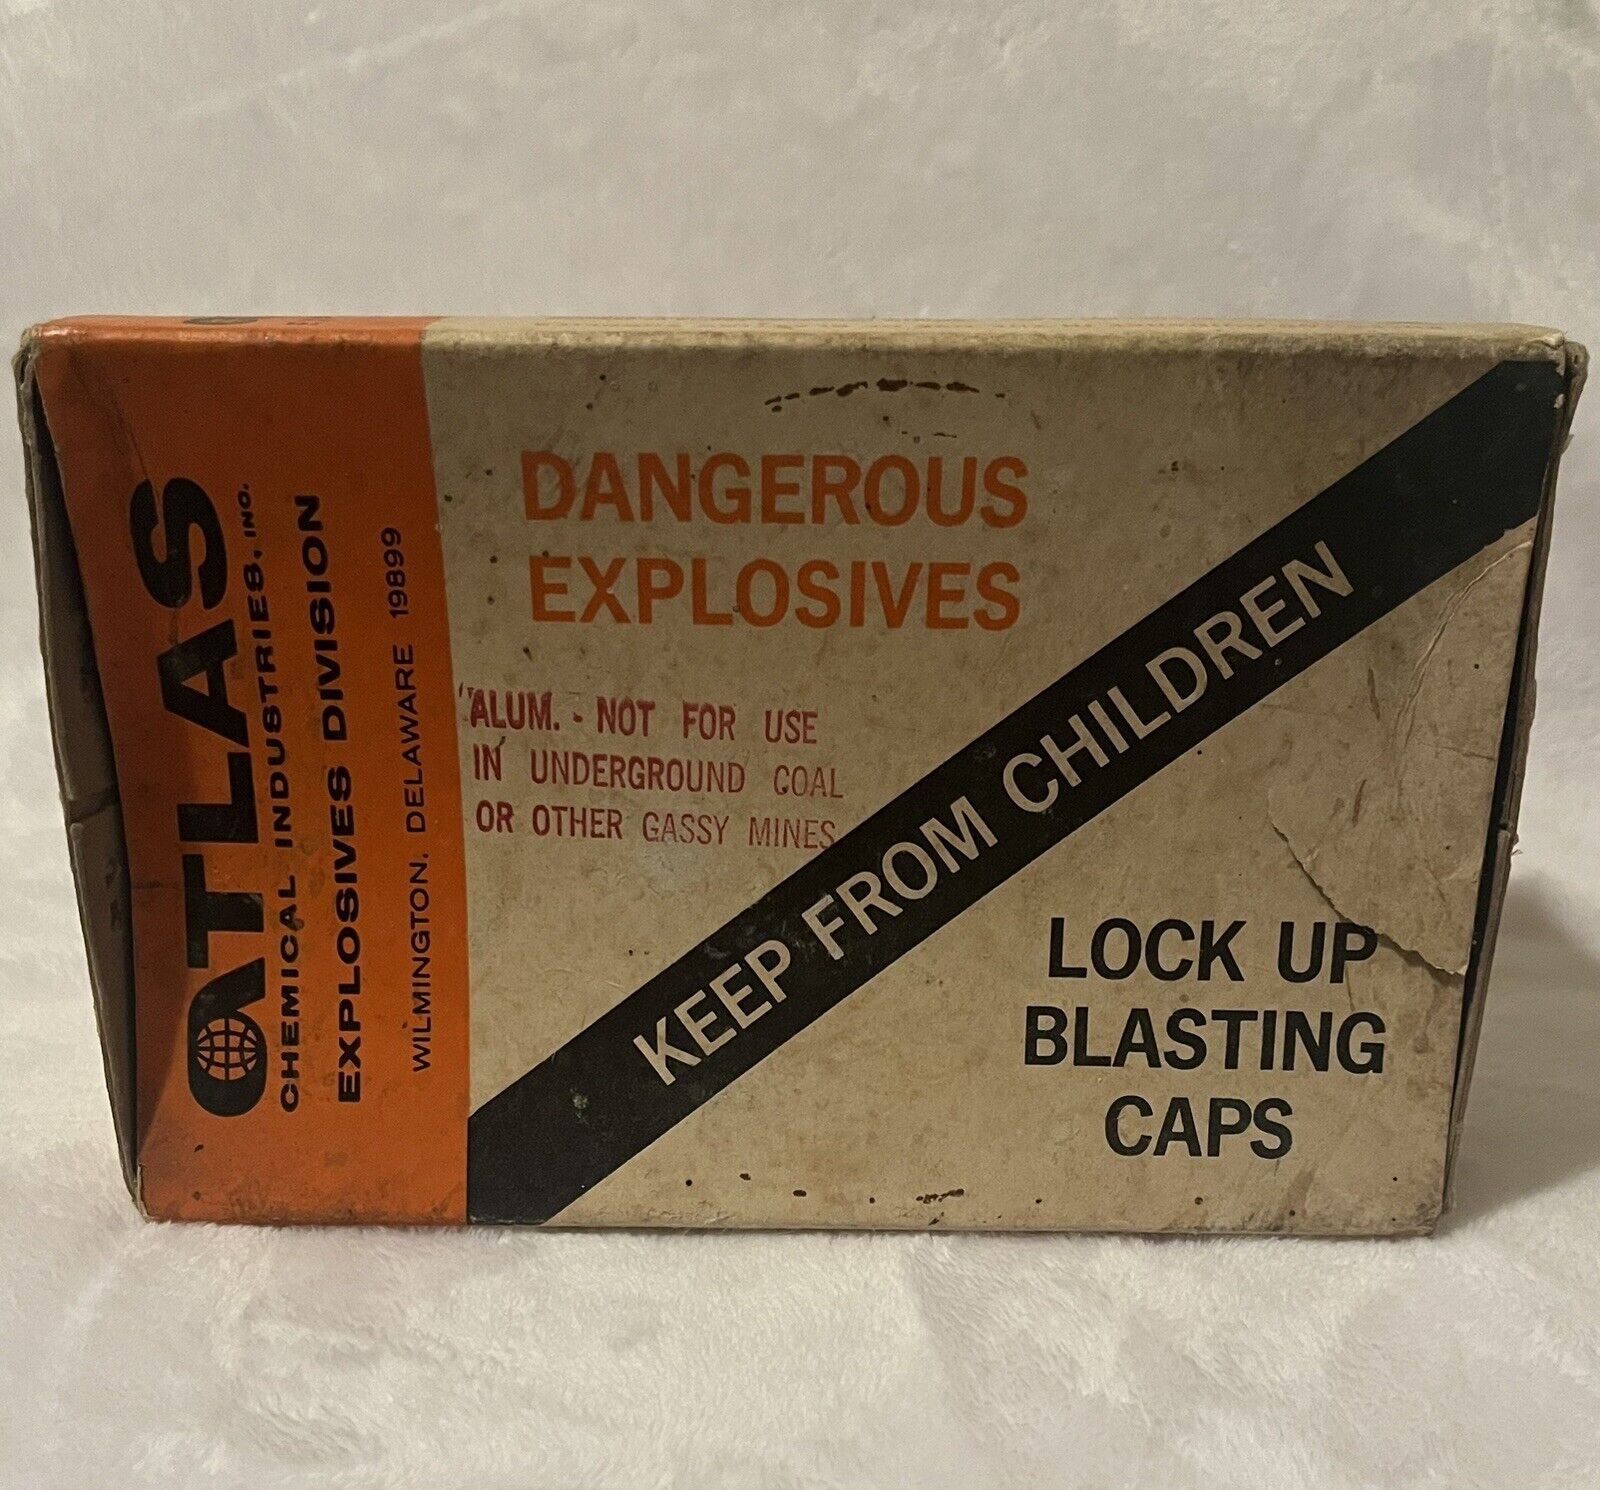 Atlas chemicals Box (Blasting Cap Box Only)